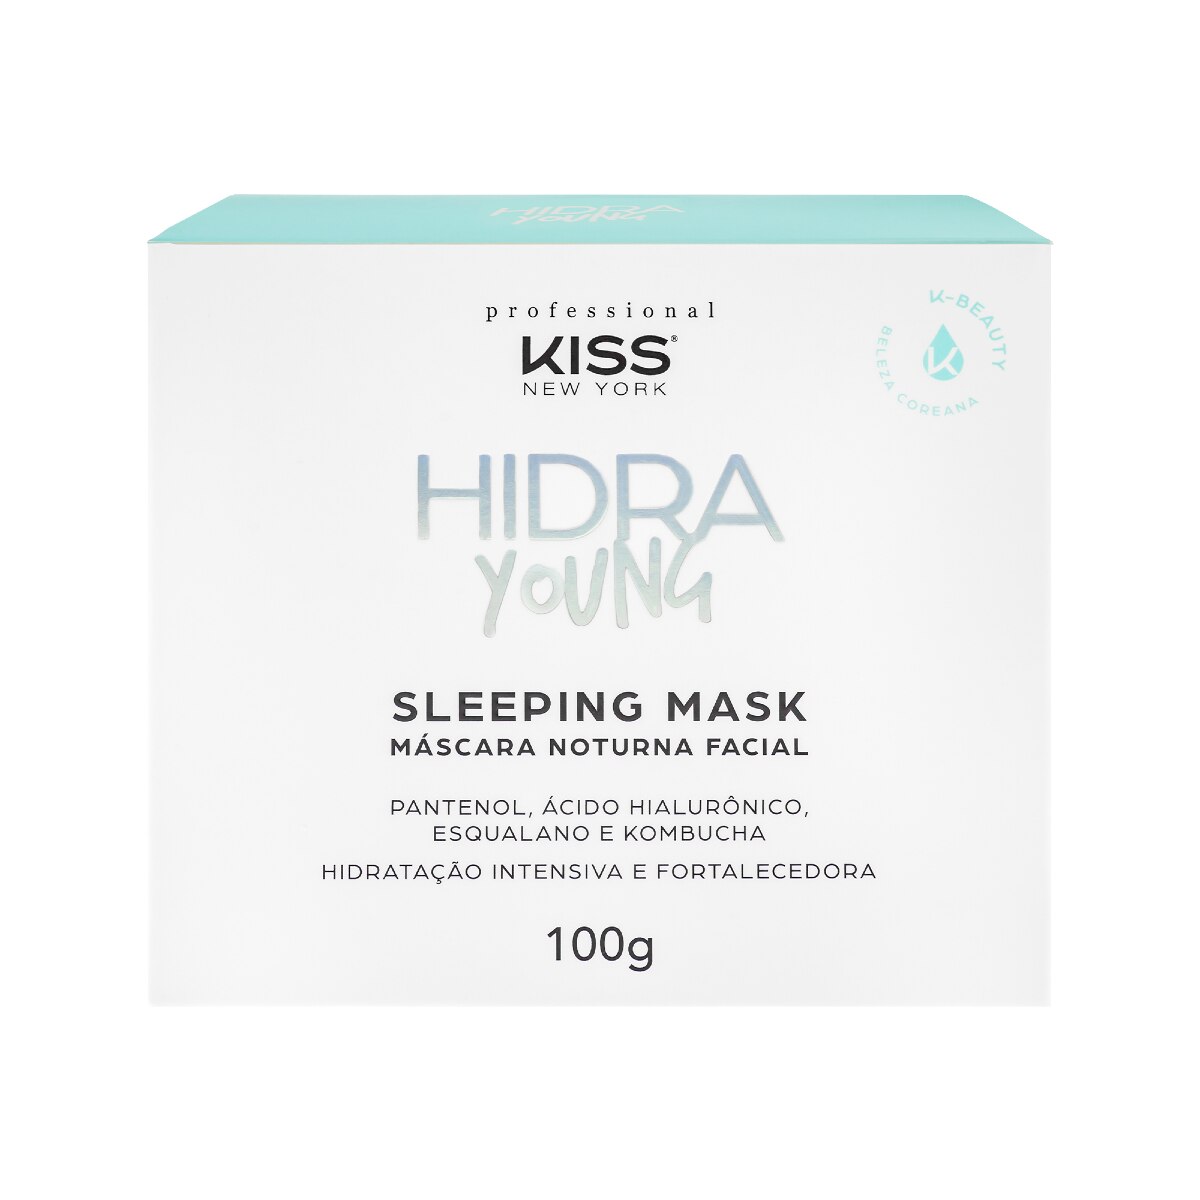 Mascara Noturna Facial Professional Kiss New York Hidra Young 100g